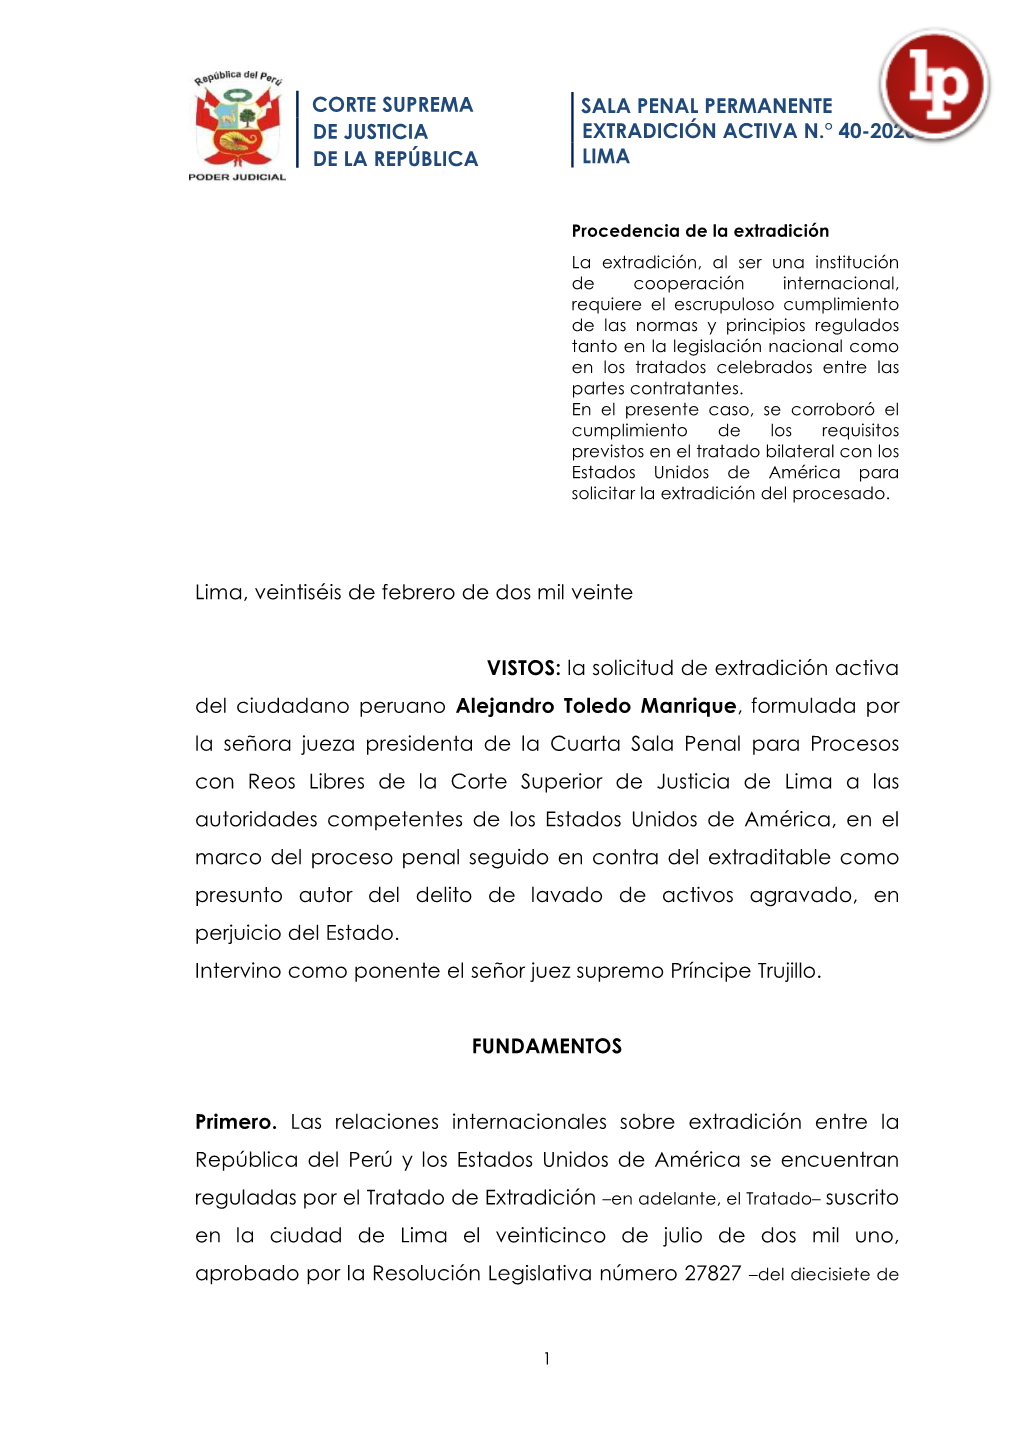 Extradición-40-2020-Lima-Alejandro